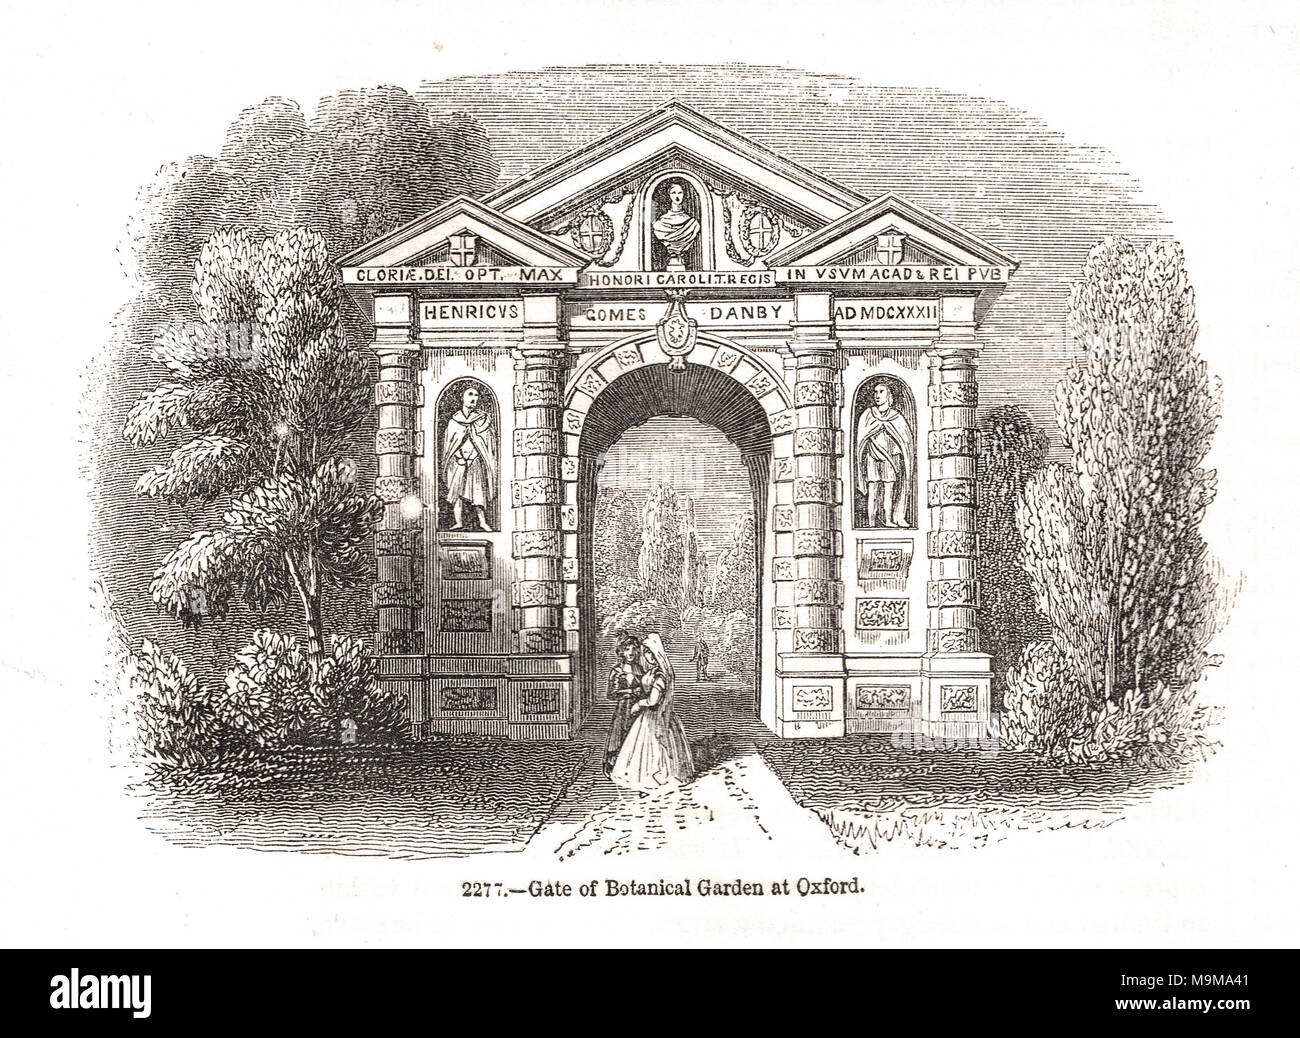 The Danby Gateway, Gate of Botanical Garden, University of Oxford, England, 19th century scene Stock Photo